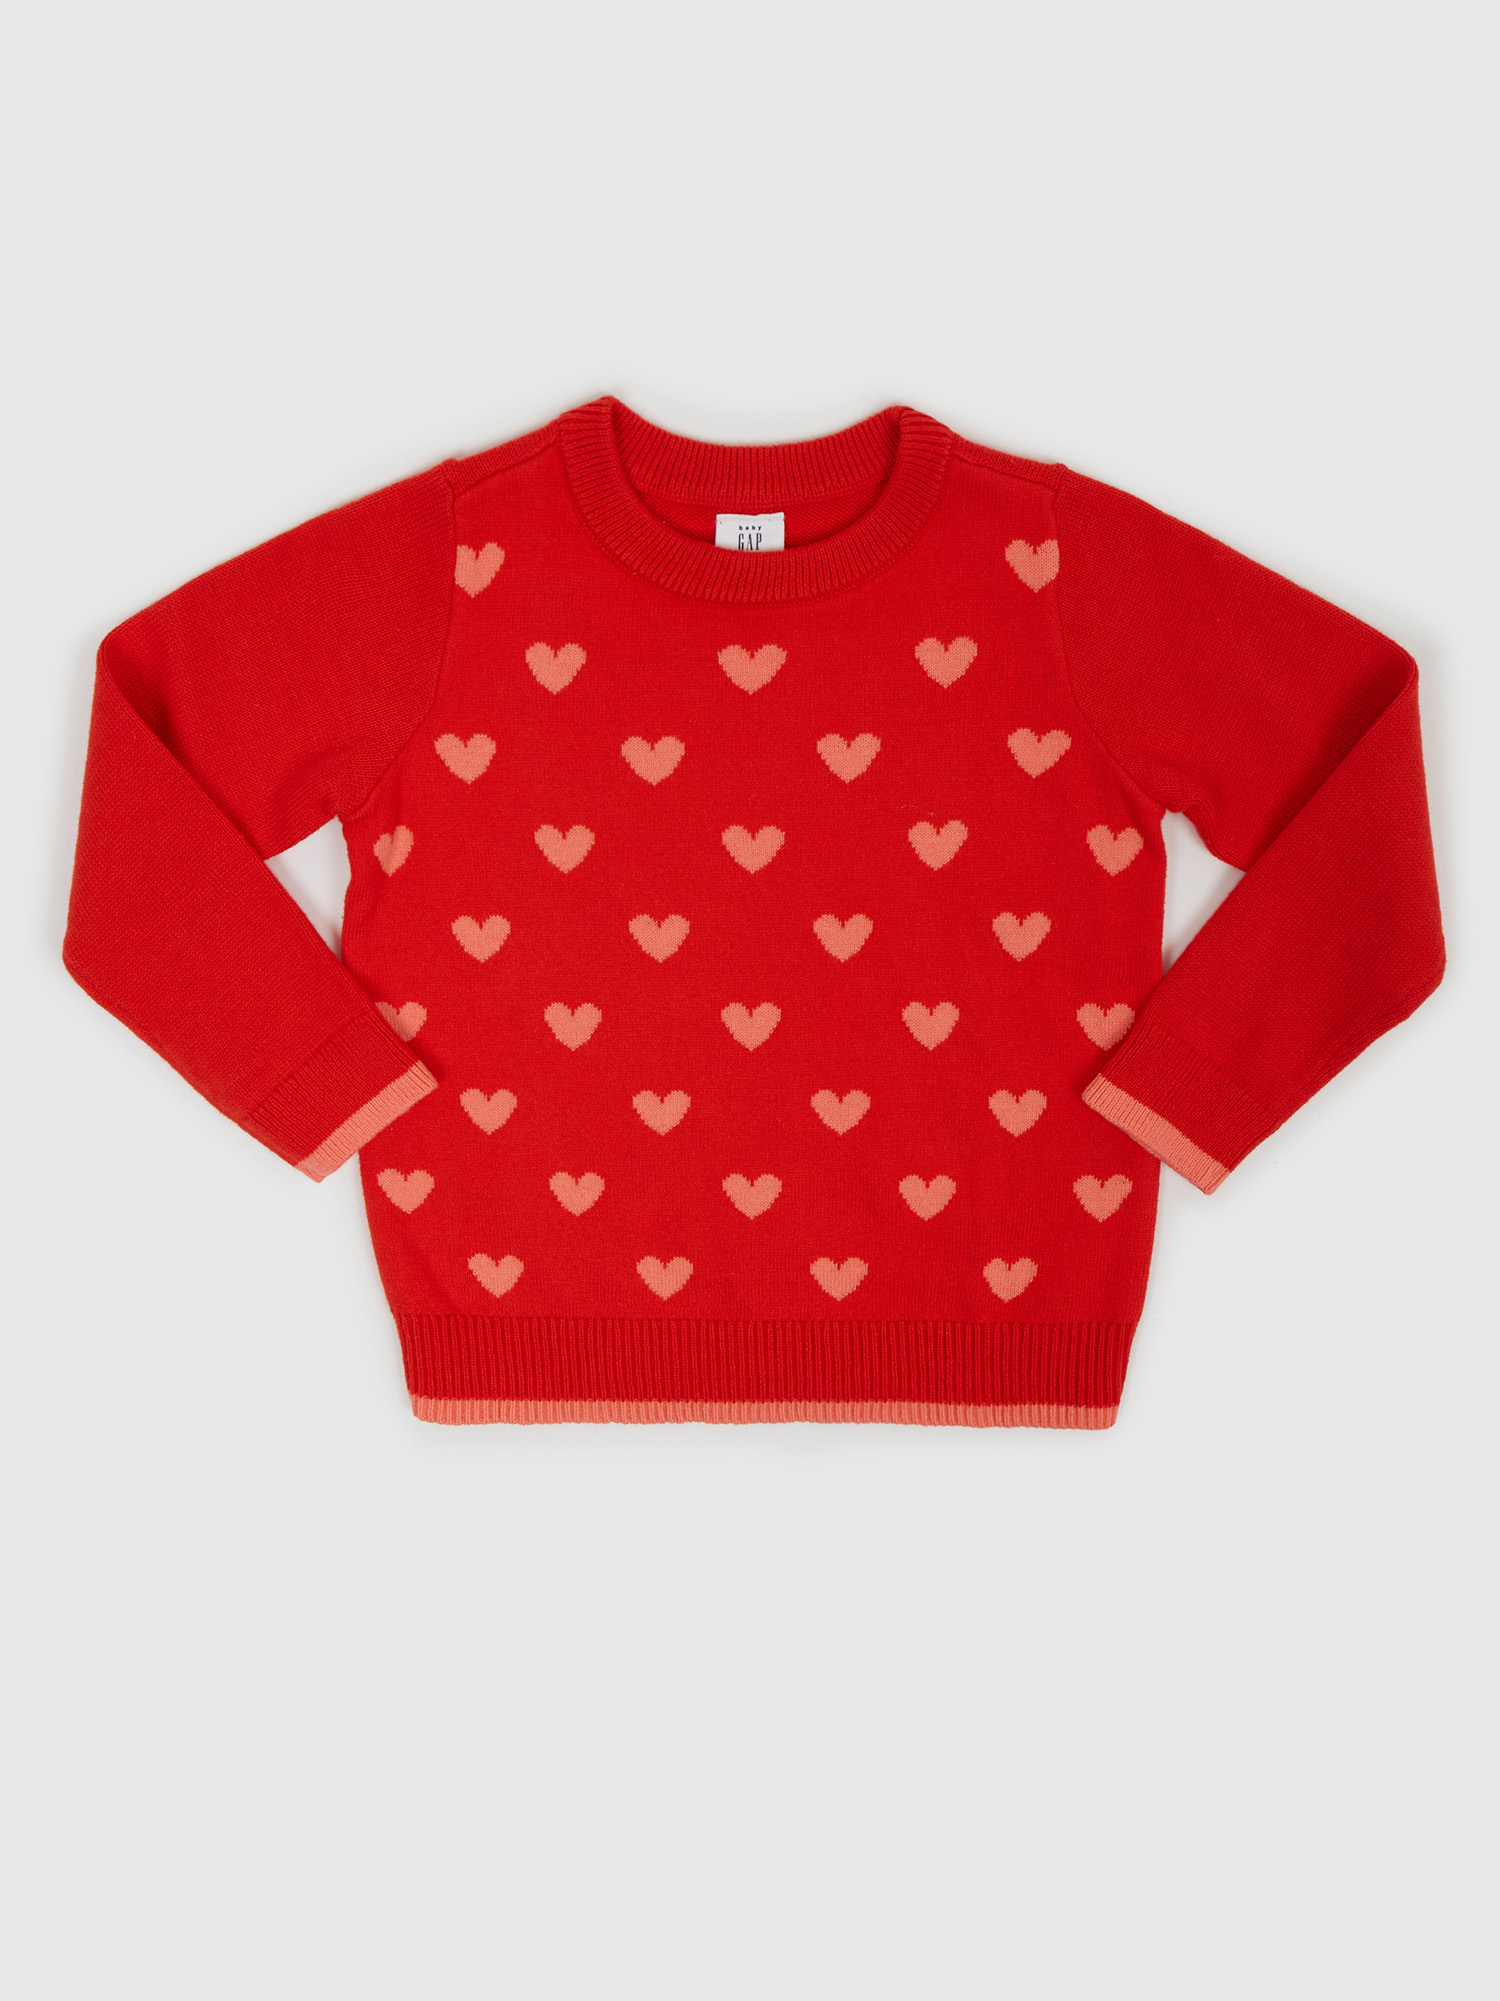 GAP Children's Sweater Heart Pattern - Girls